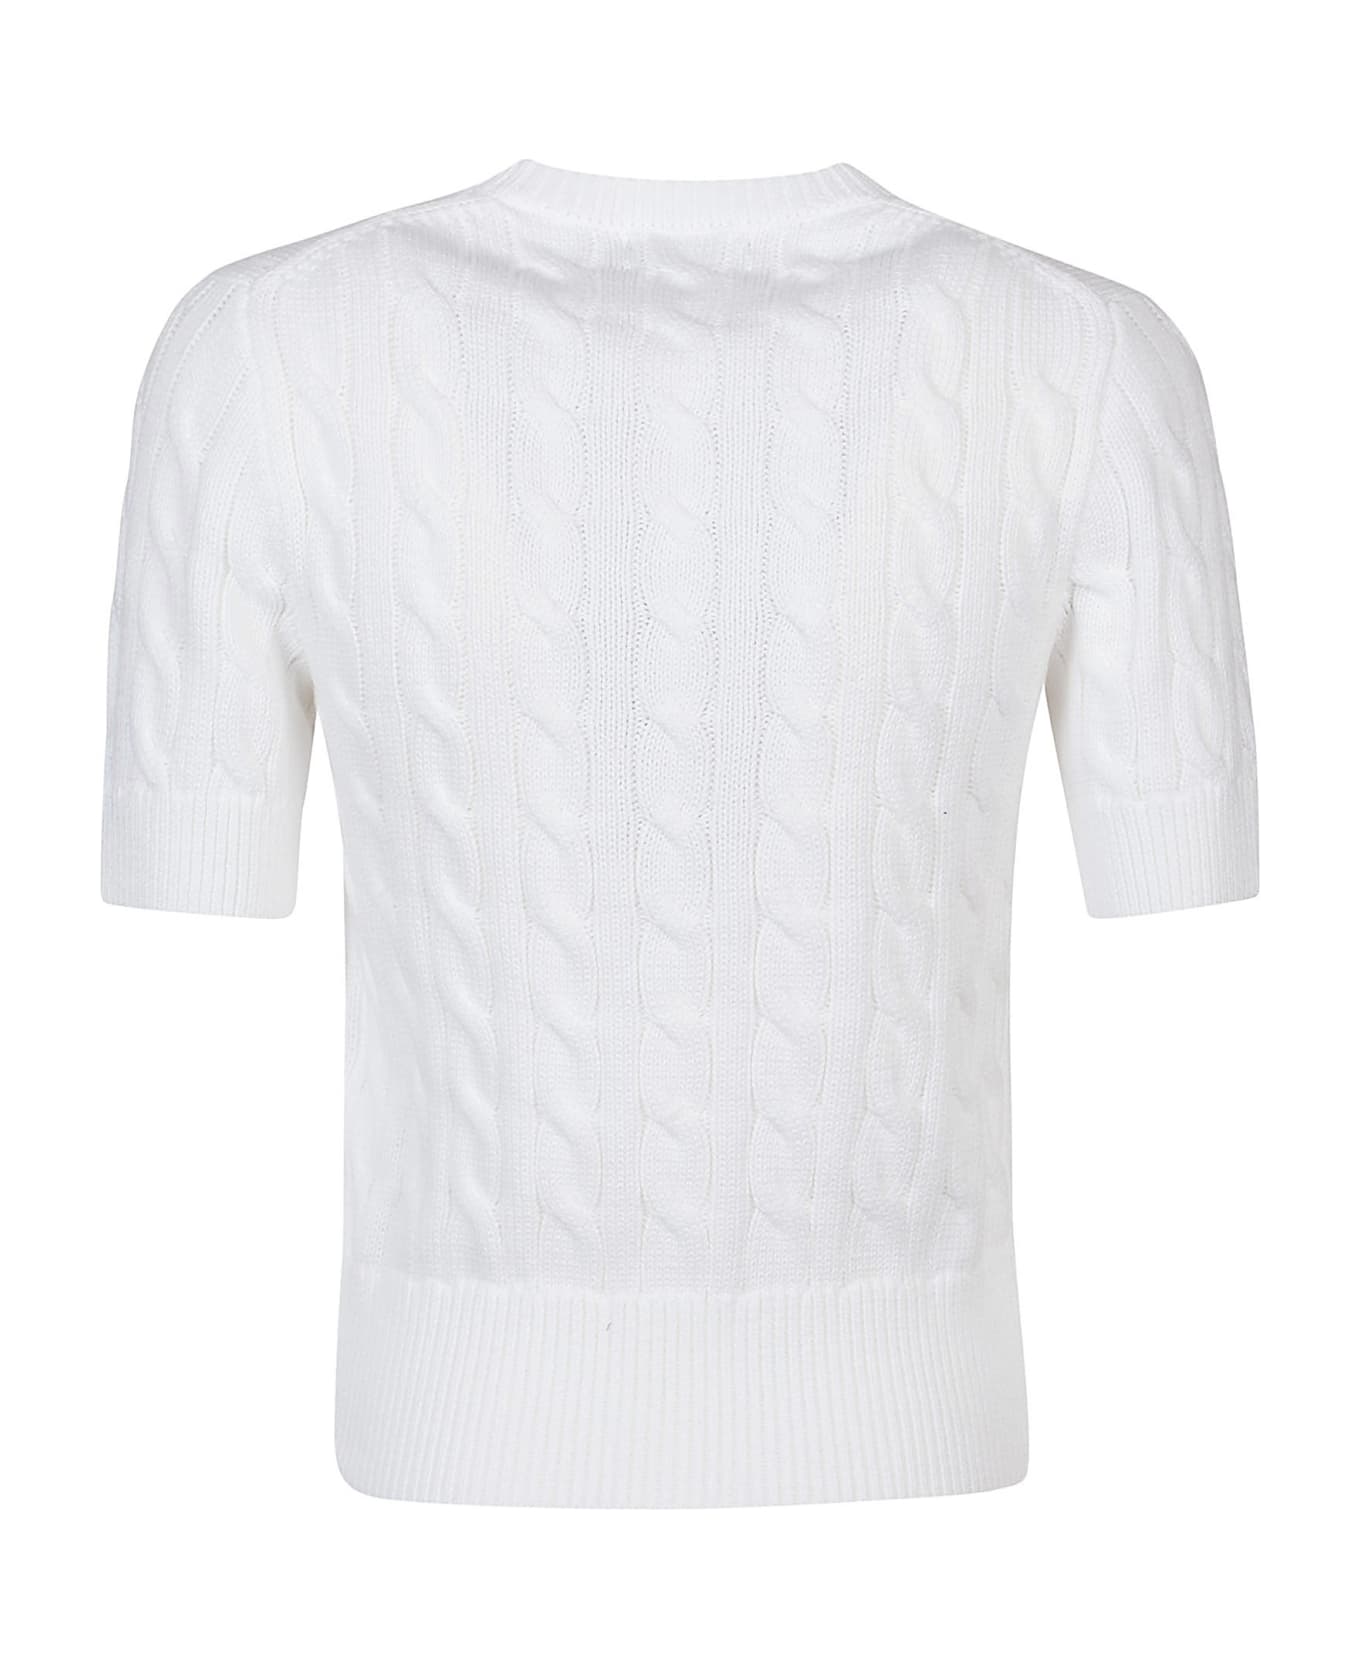 Polo Ralph Lauren Short Sleeve Cardigan - White